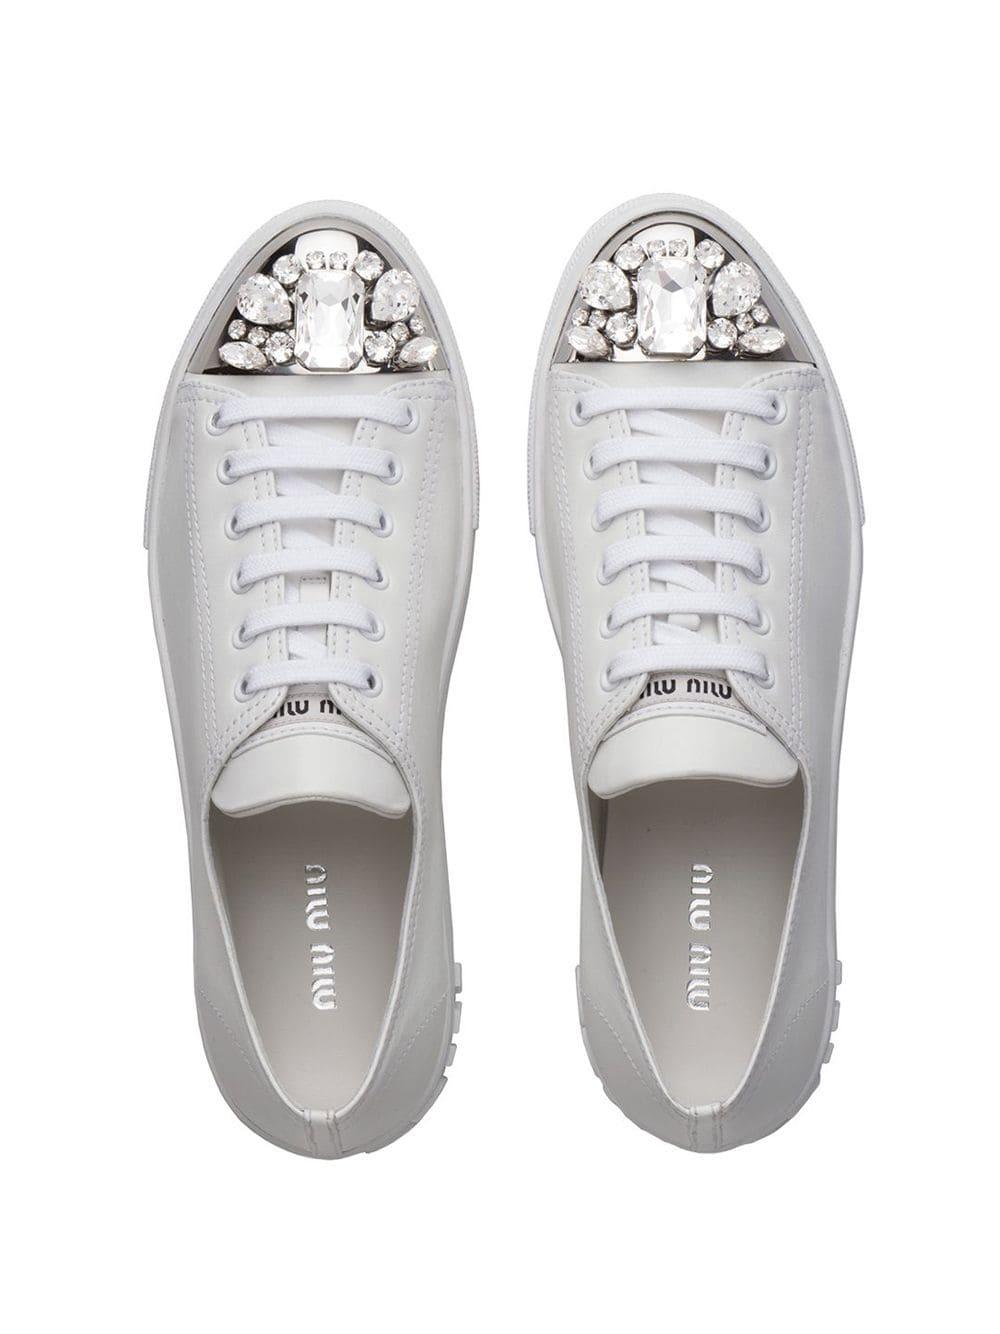 Miu Miu Leather Swarovski Crystal Toe-cap Sneakers in White | Lyst